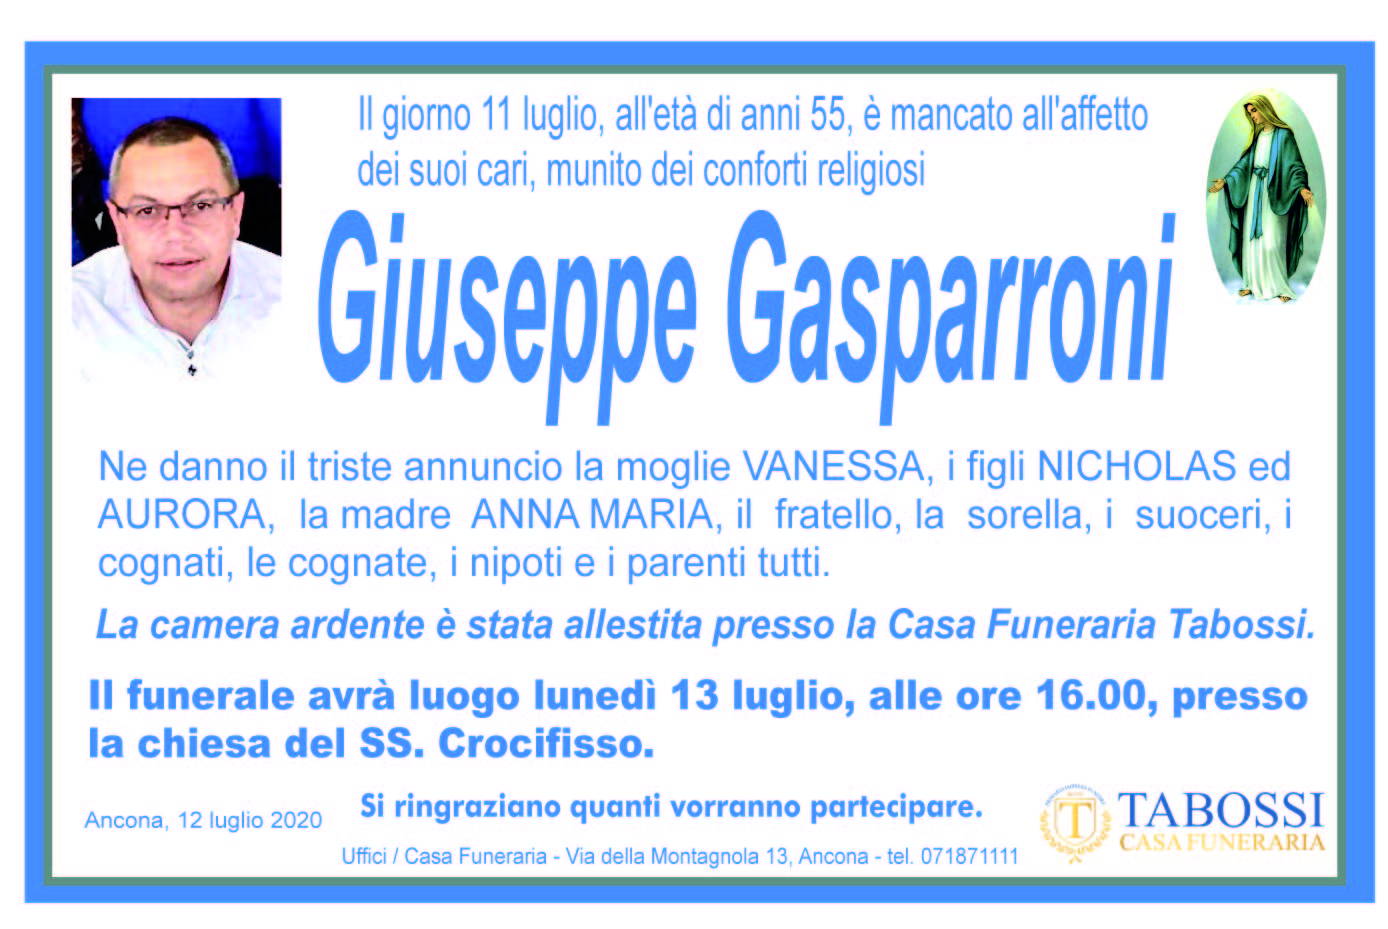 Giuseppe Gasparroni